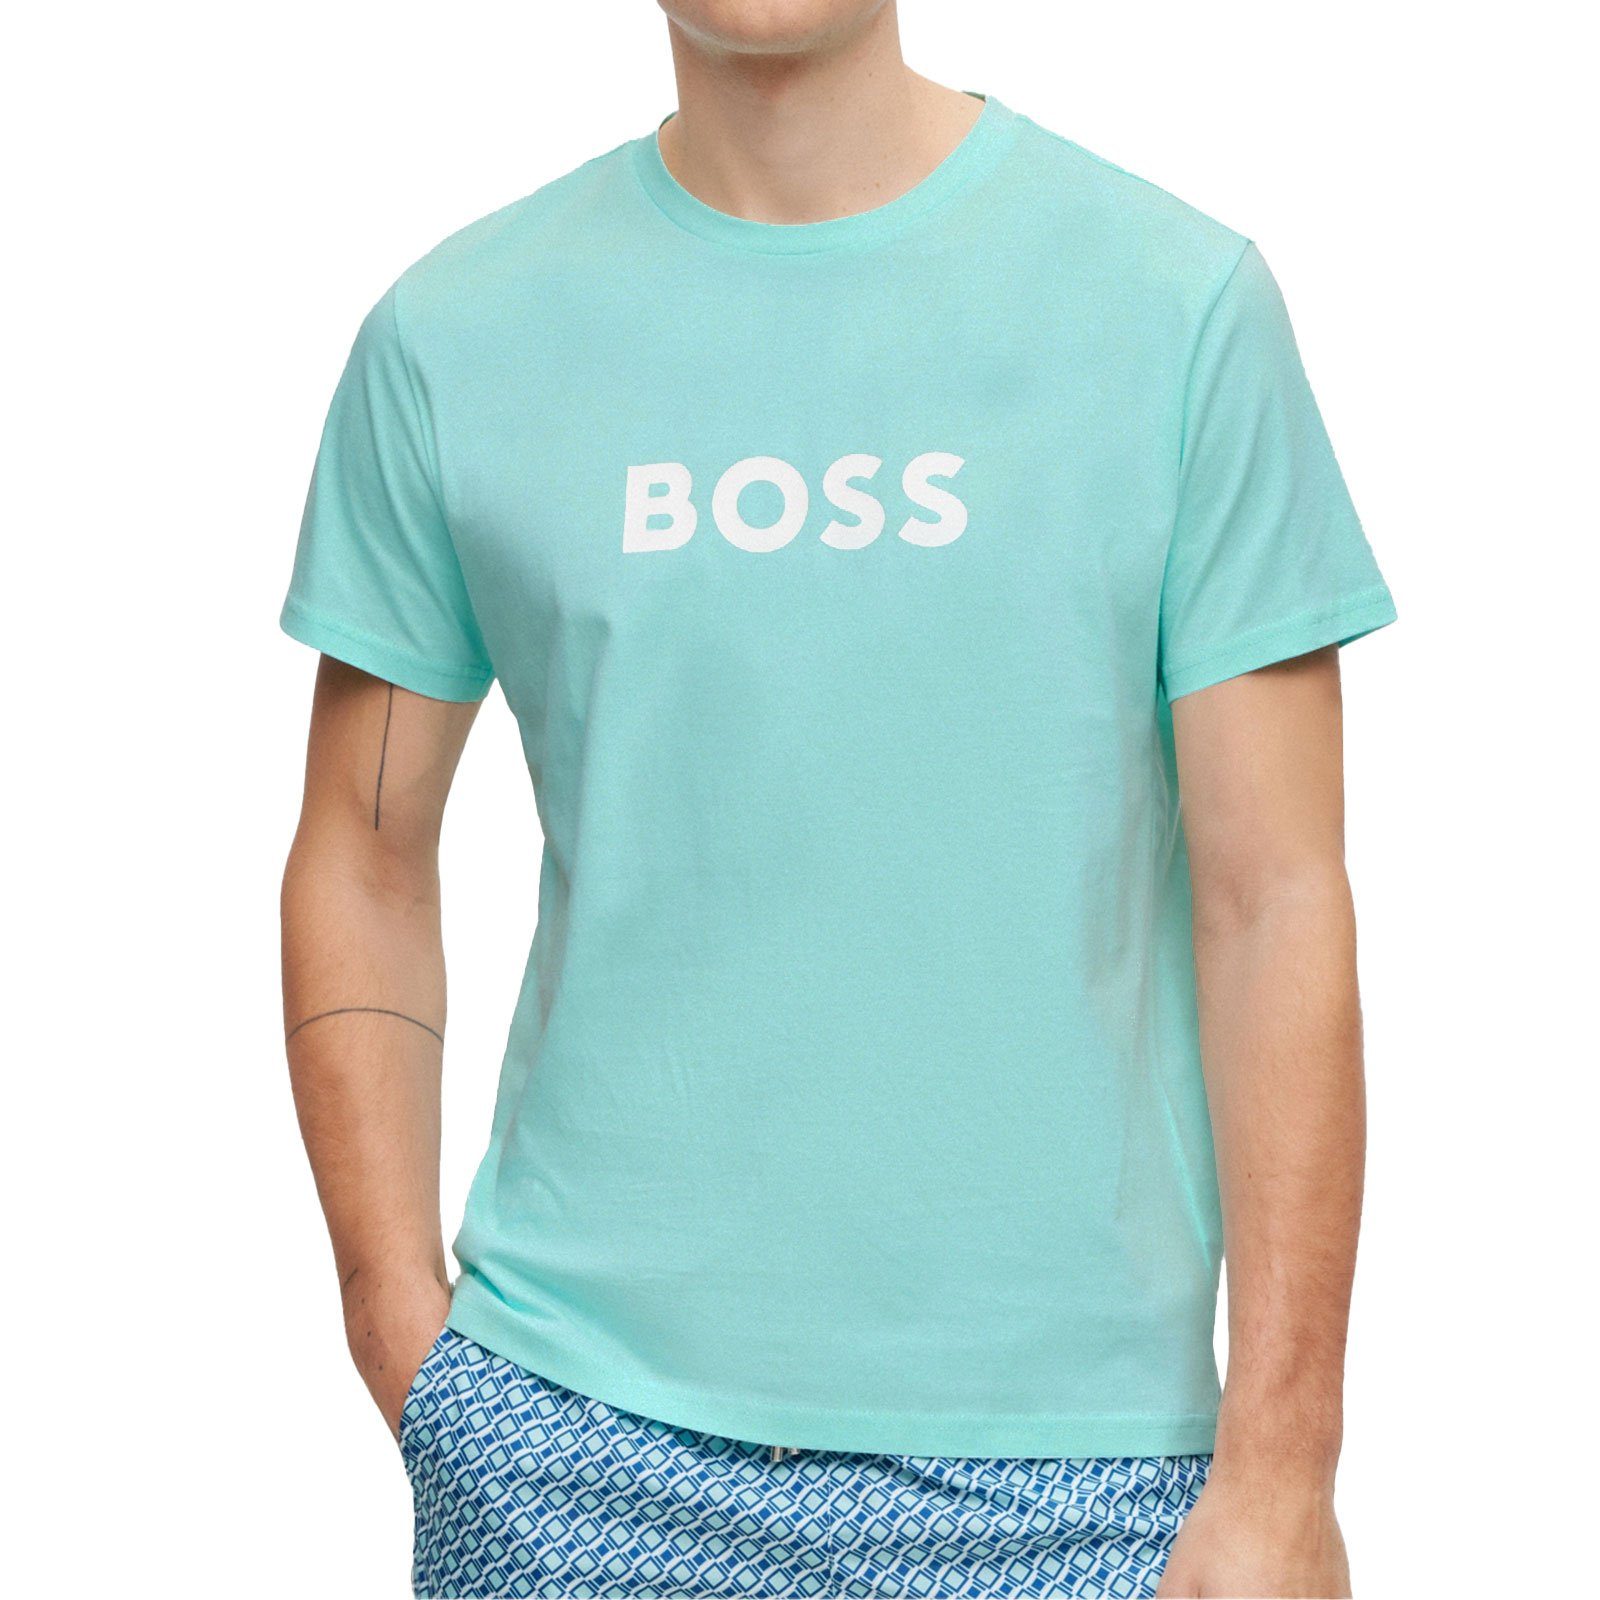 Markenprint auf BOSS T-Shirt open der Brust T-Shirt großem mit green 356 RN